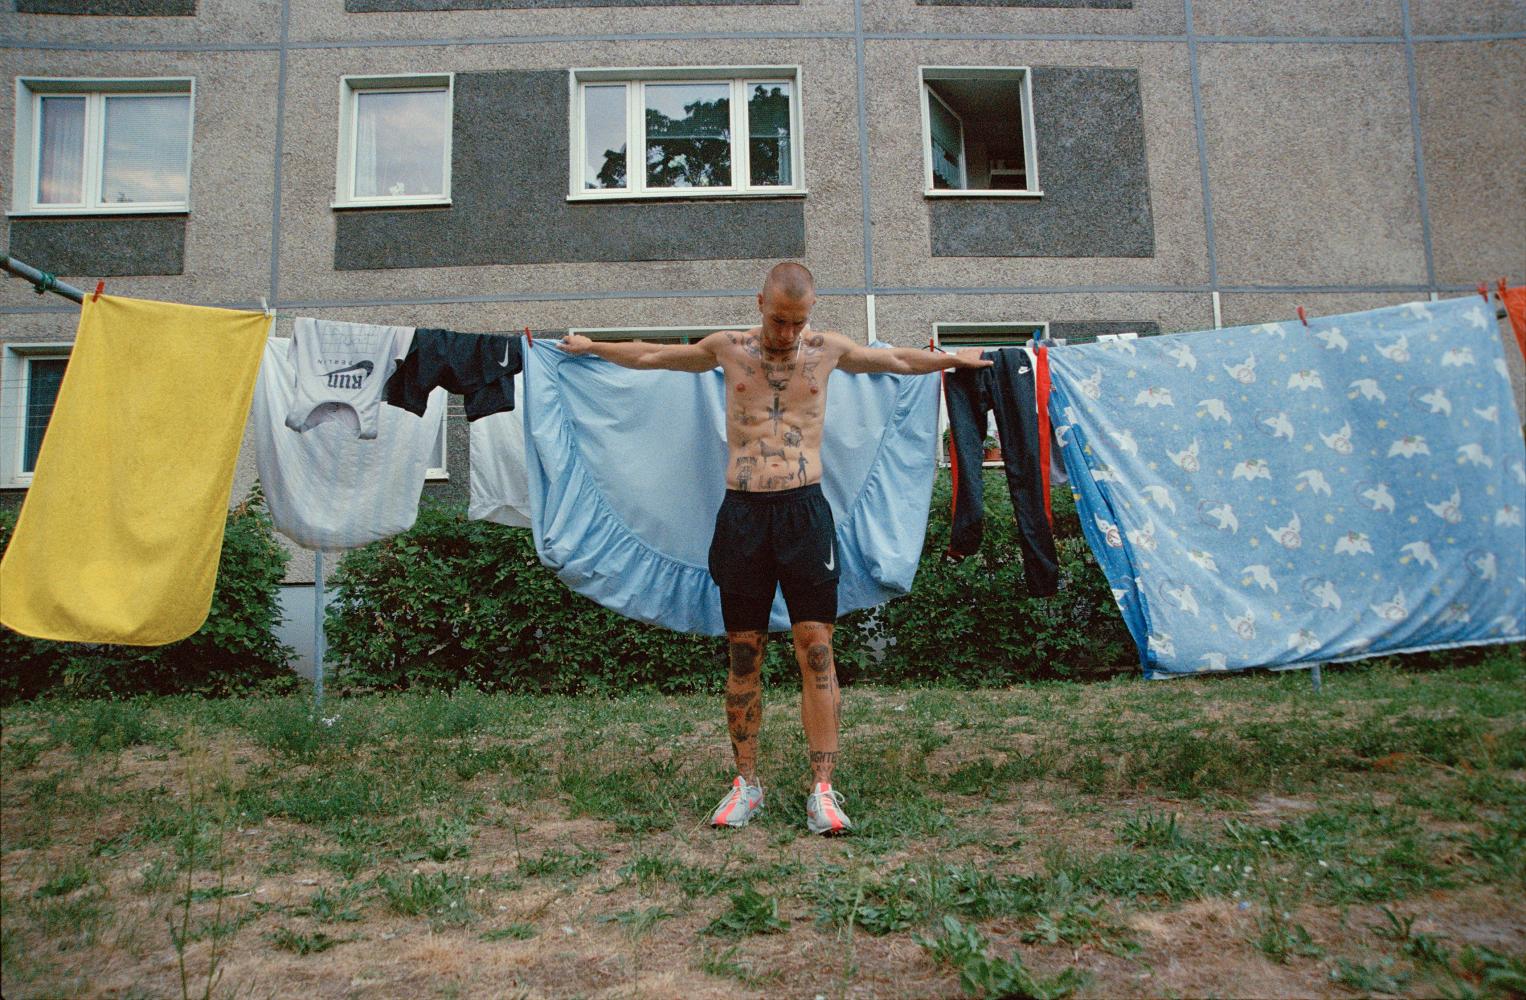 Lennart Brede "The Washing", 2018